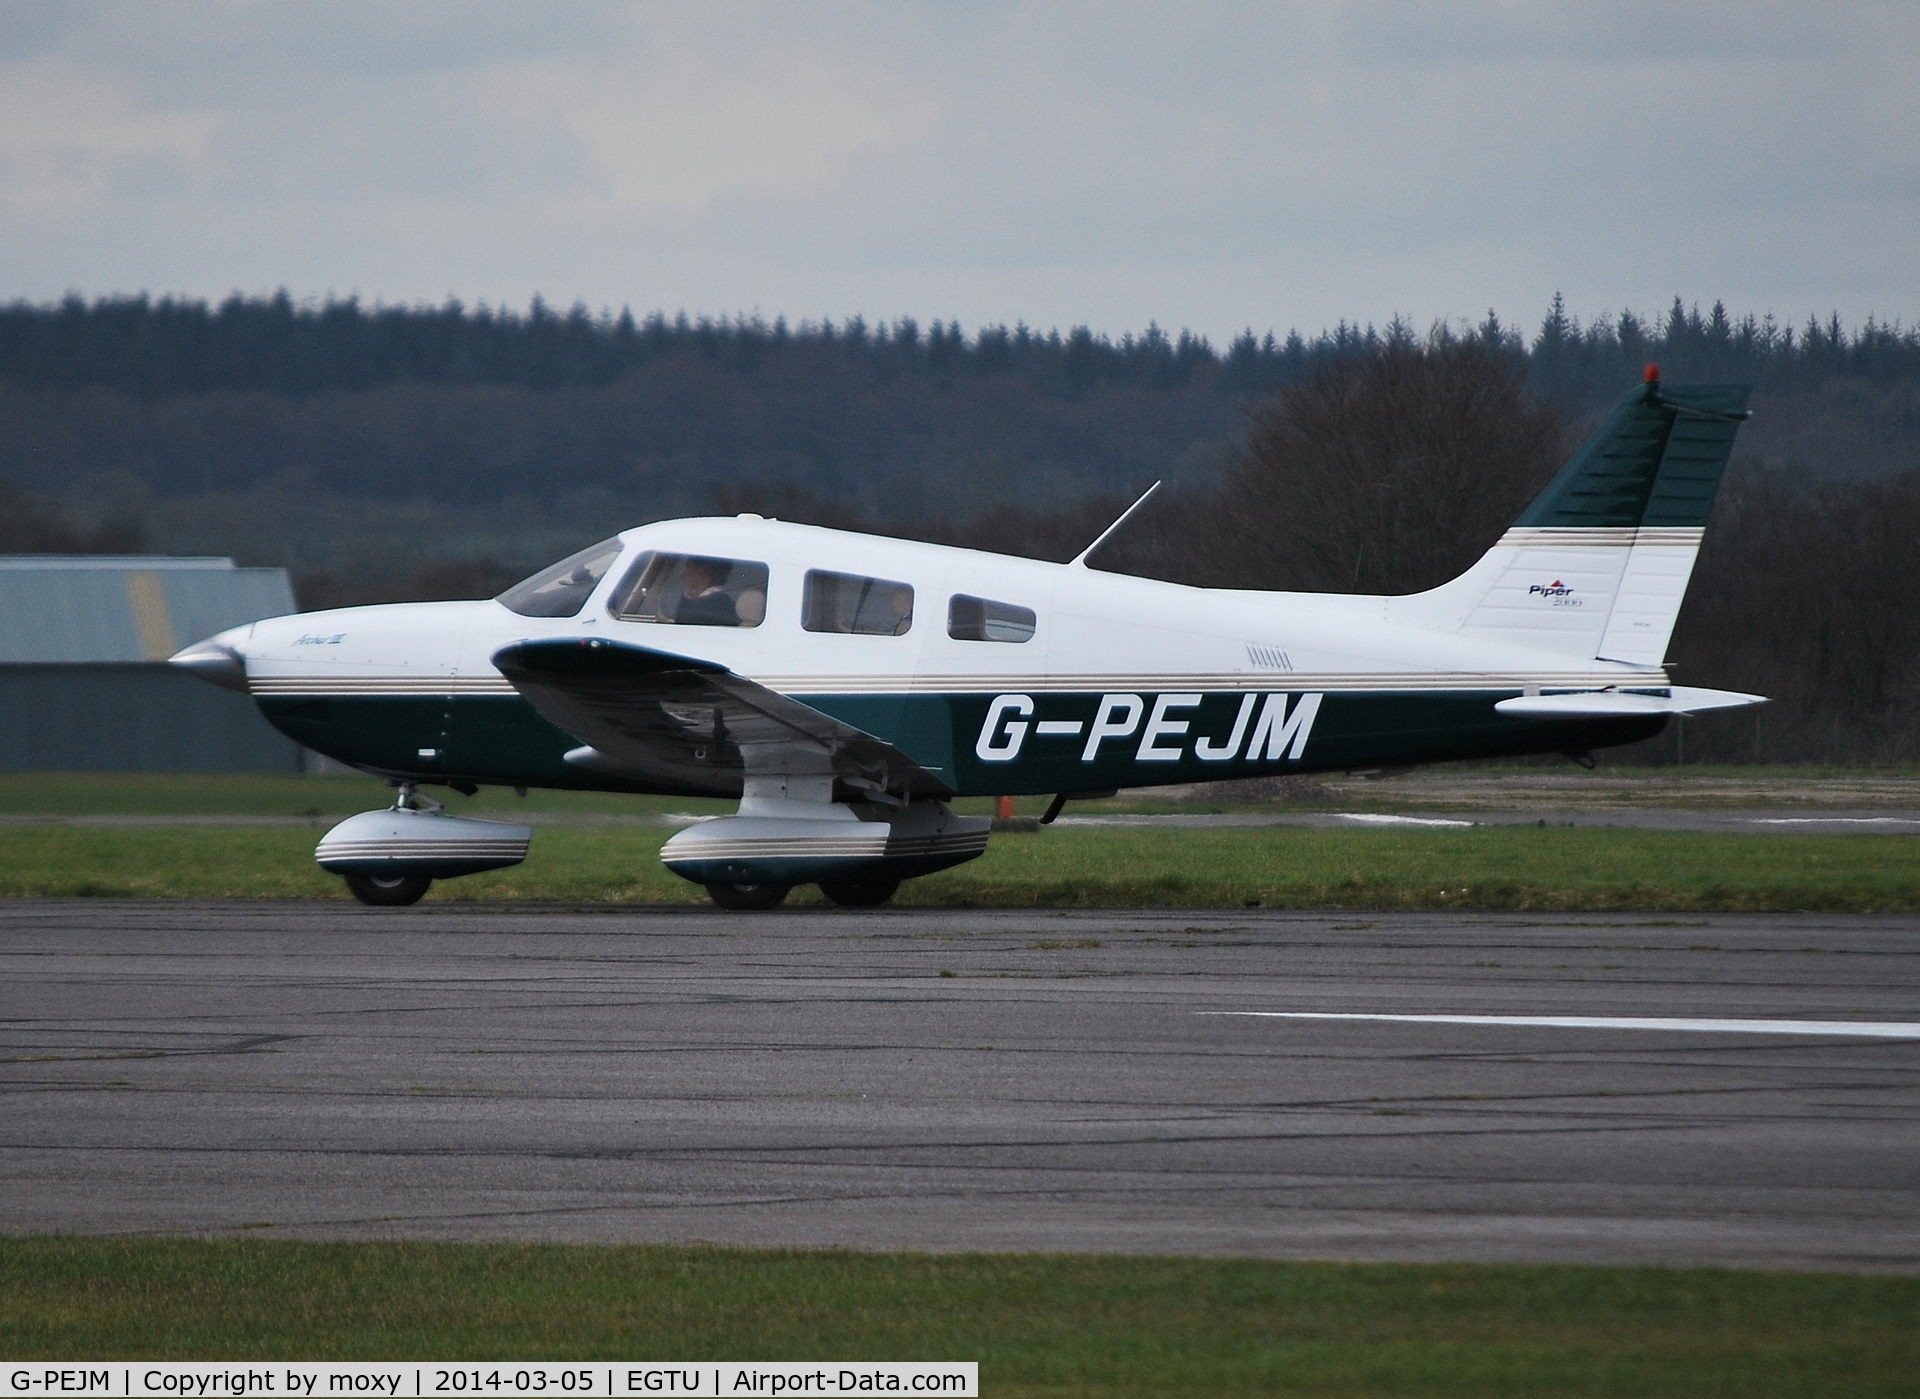 G-PEJM, 2000 Piper PA-28-181 Cherokee Archer III C/N 2843355, Piper Cherokee Archer III at Dunkeswell. Ex N41860